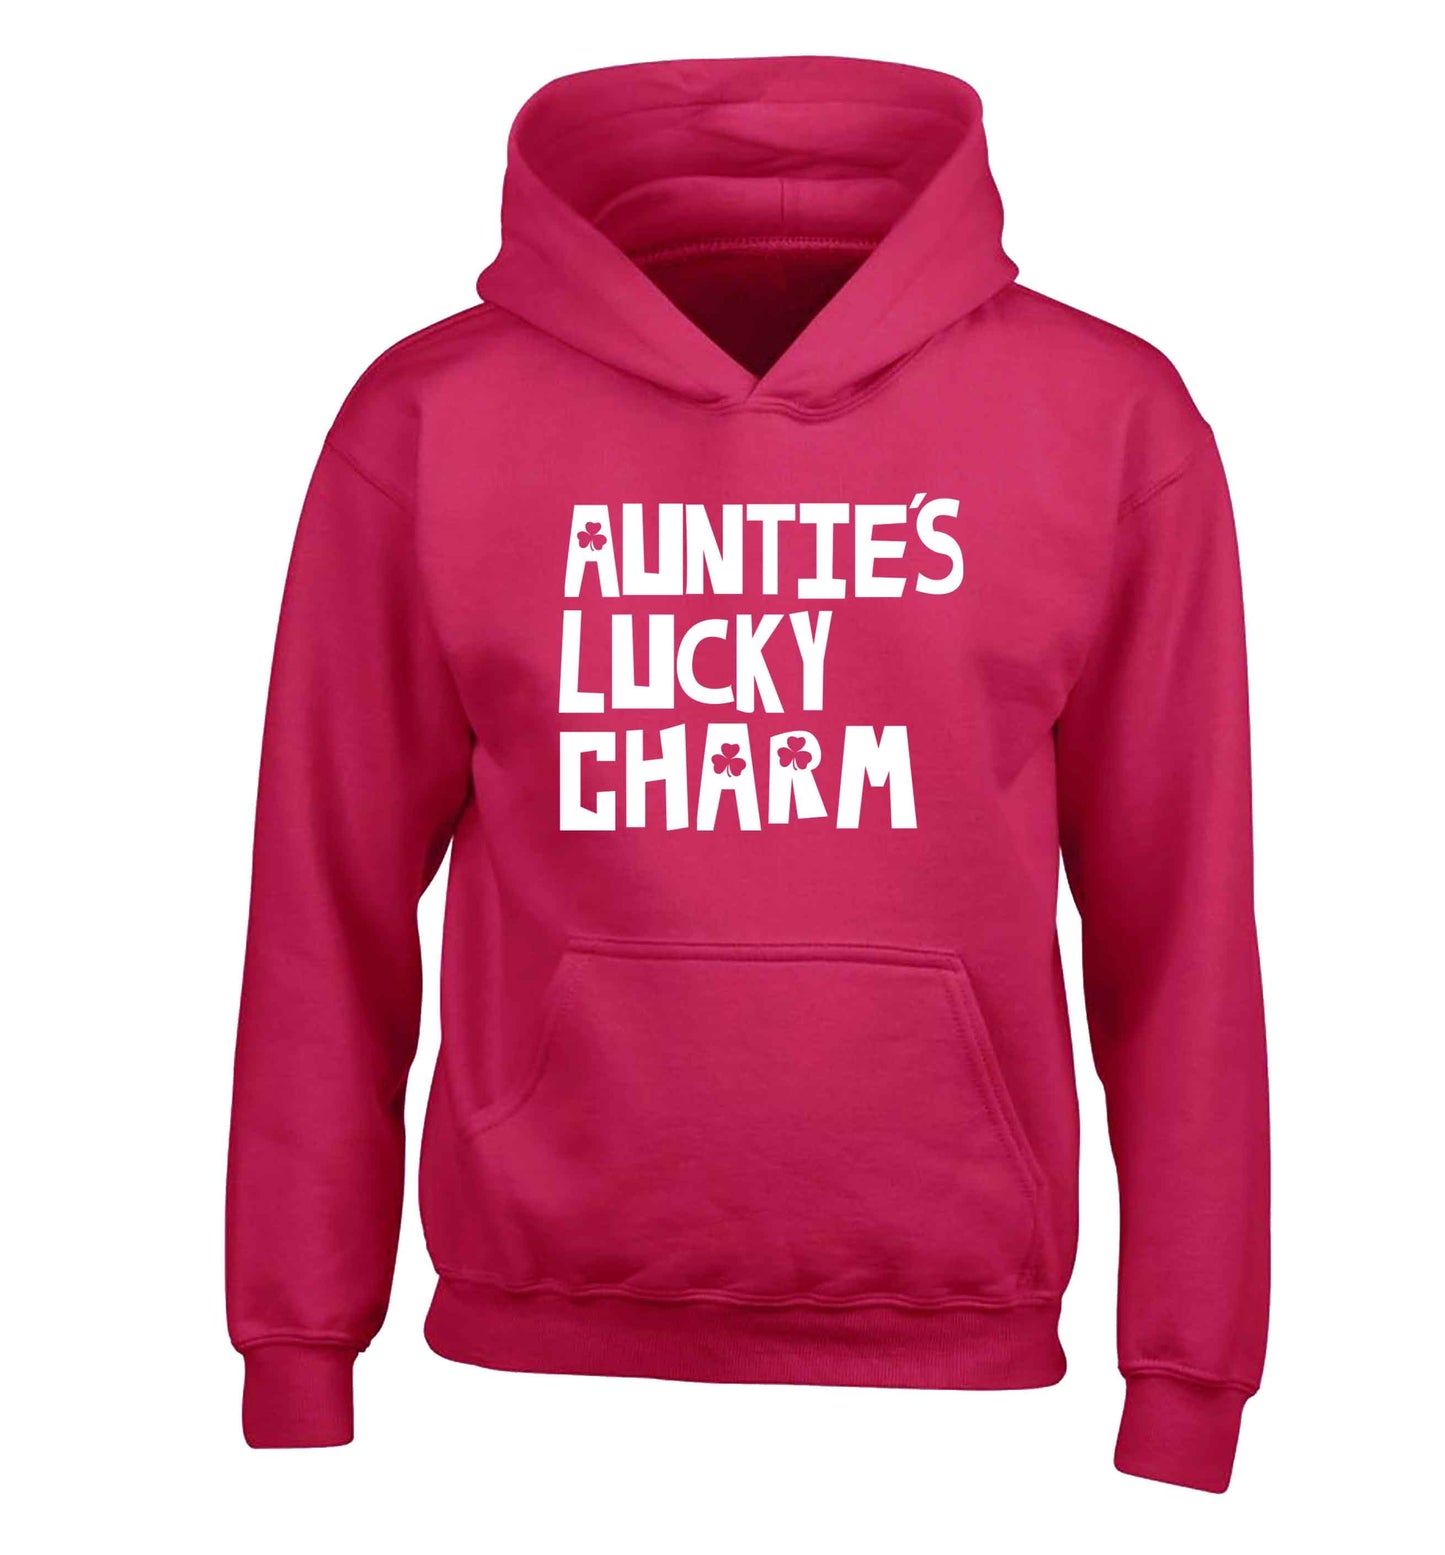 Auntie's lucky charm children's pink hoodie 12-13 Years